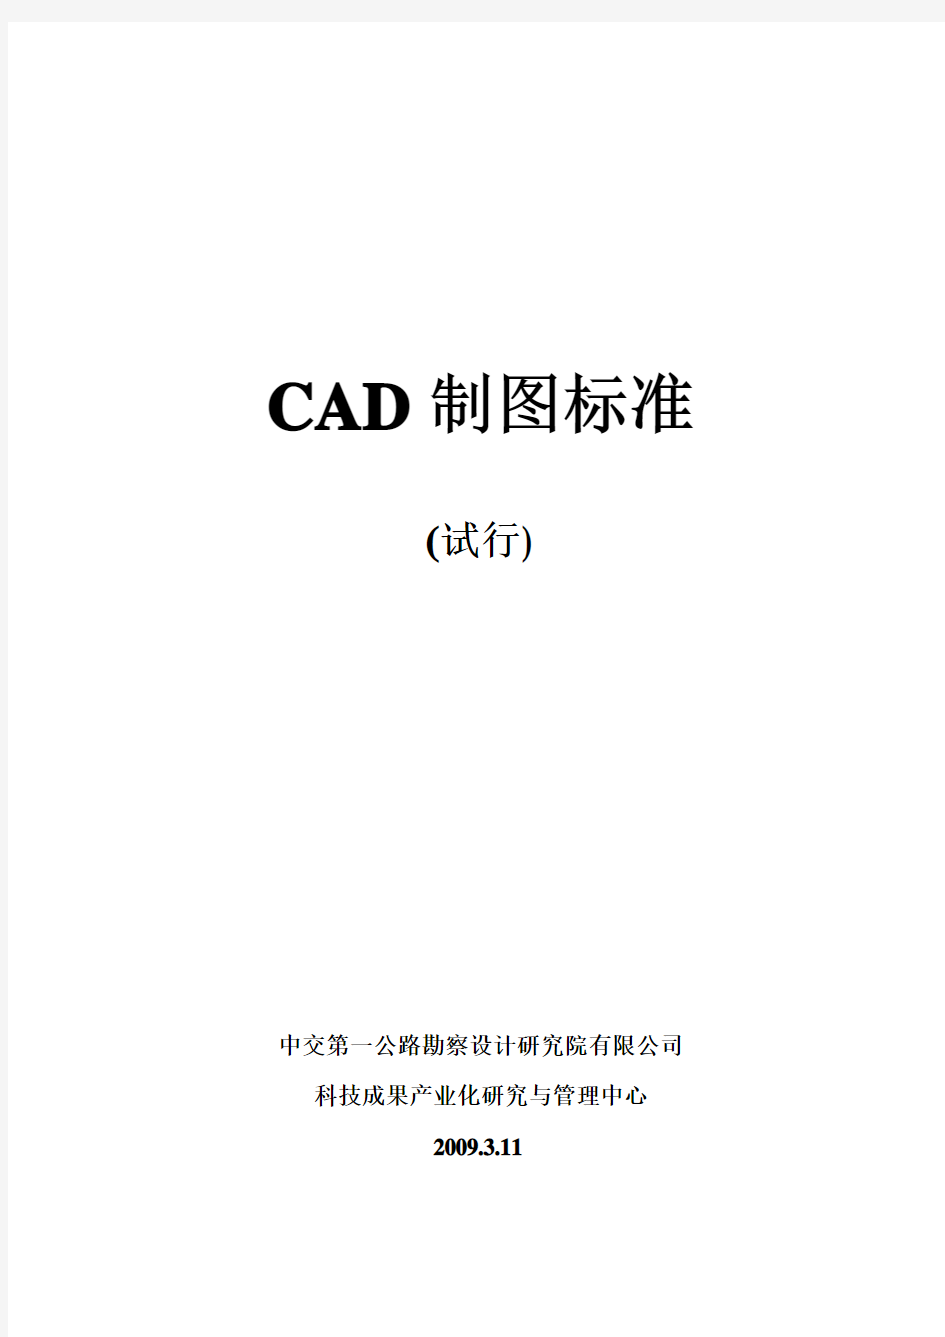 CAD制图标准  中交第一公路勘察设计研究院有限公司科技成果产业化研究与管理中心2009.3.11